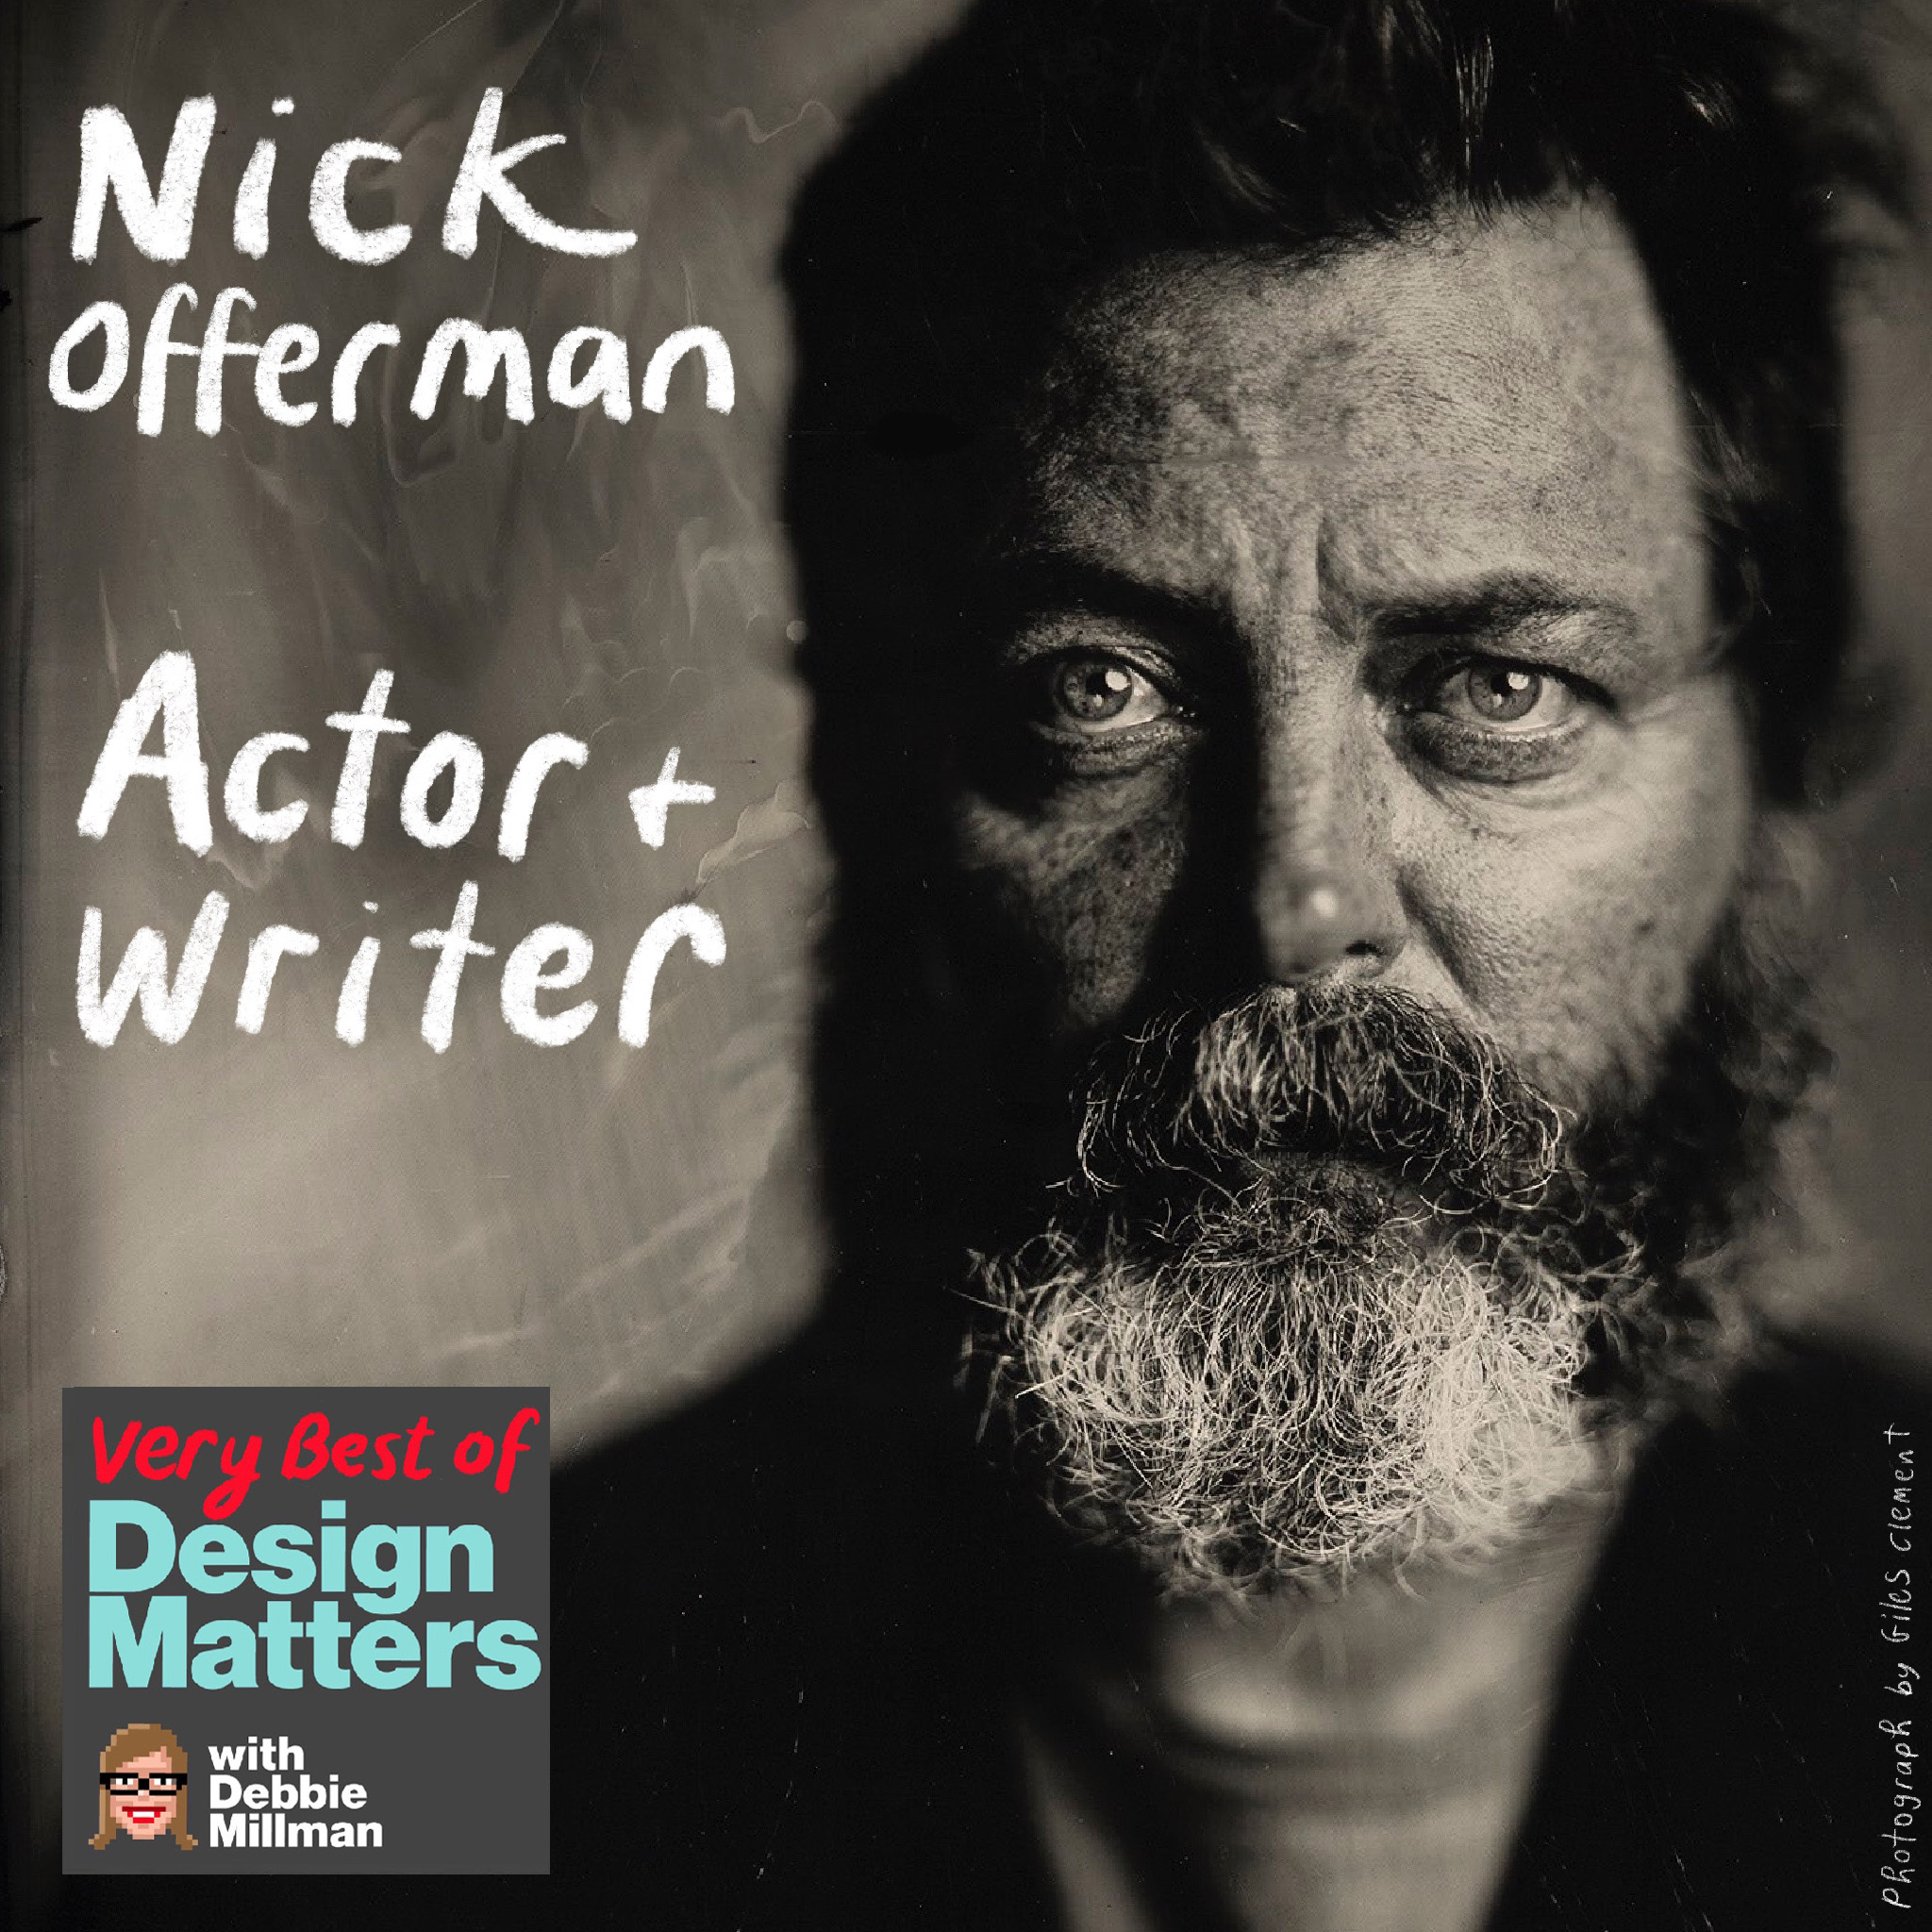 Best of Design Matters: Nick Offerman